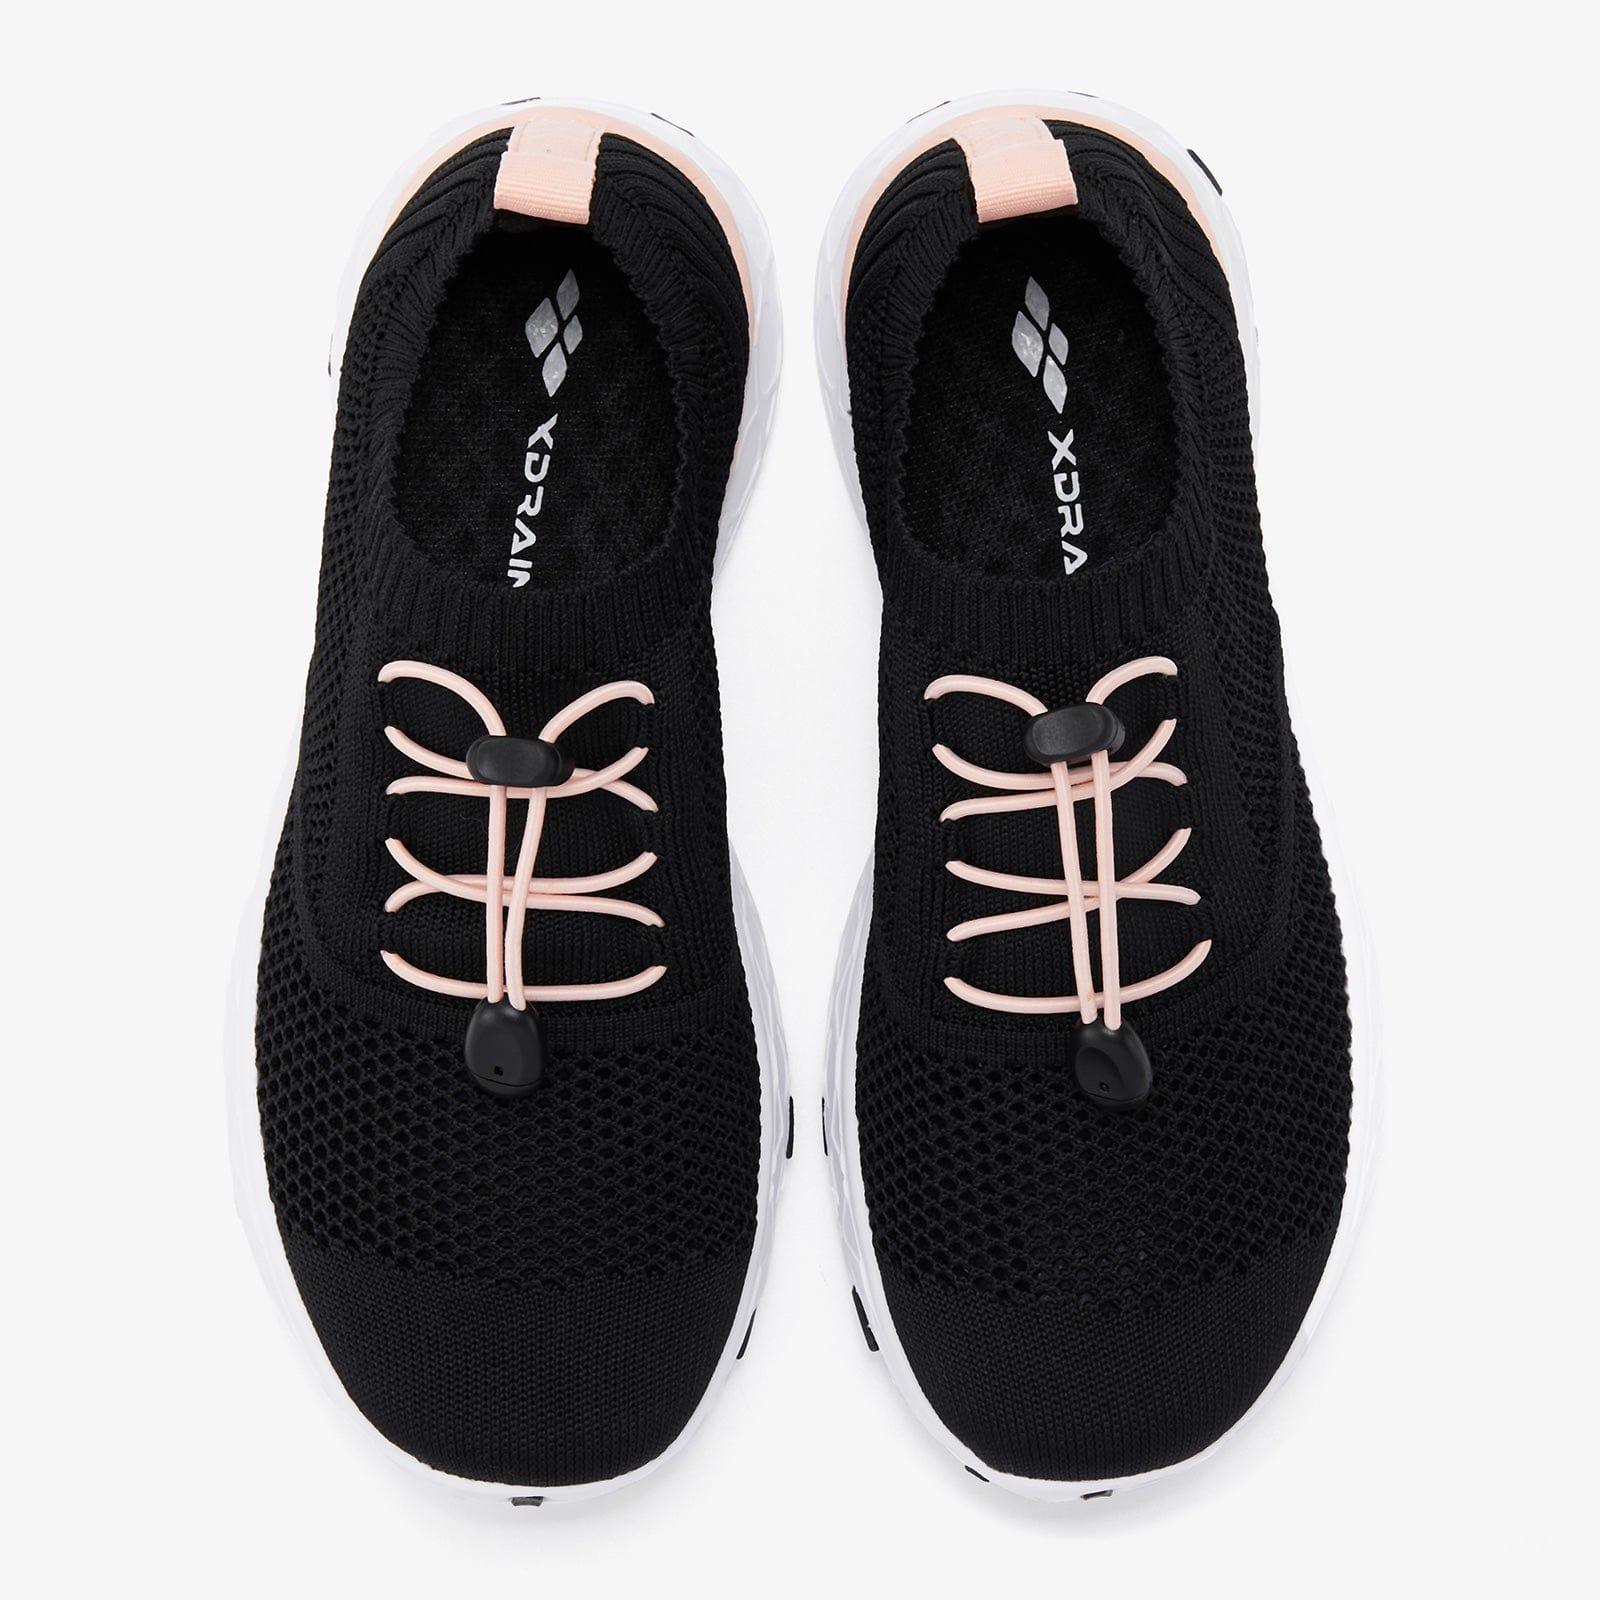 Aleader Women’s Xdrain Classic Knit Water Shoes